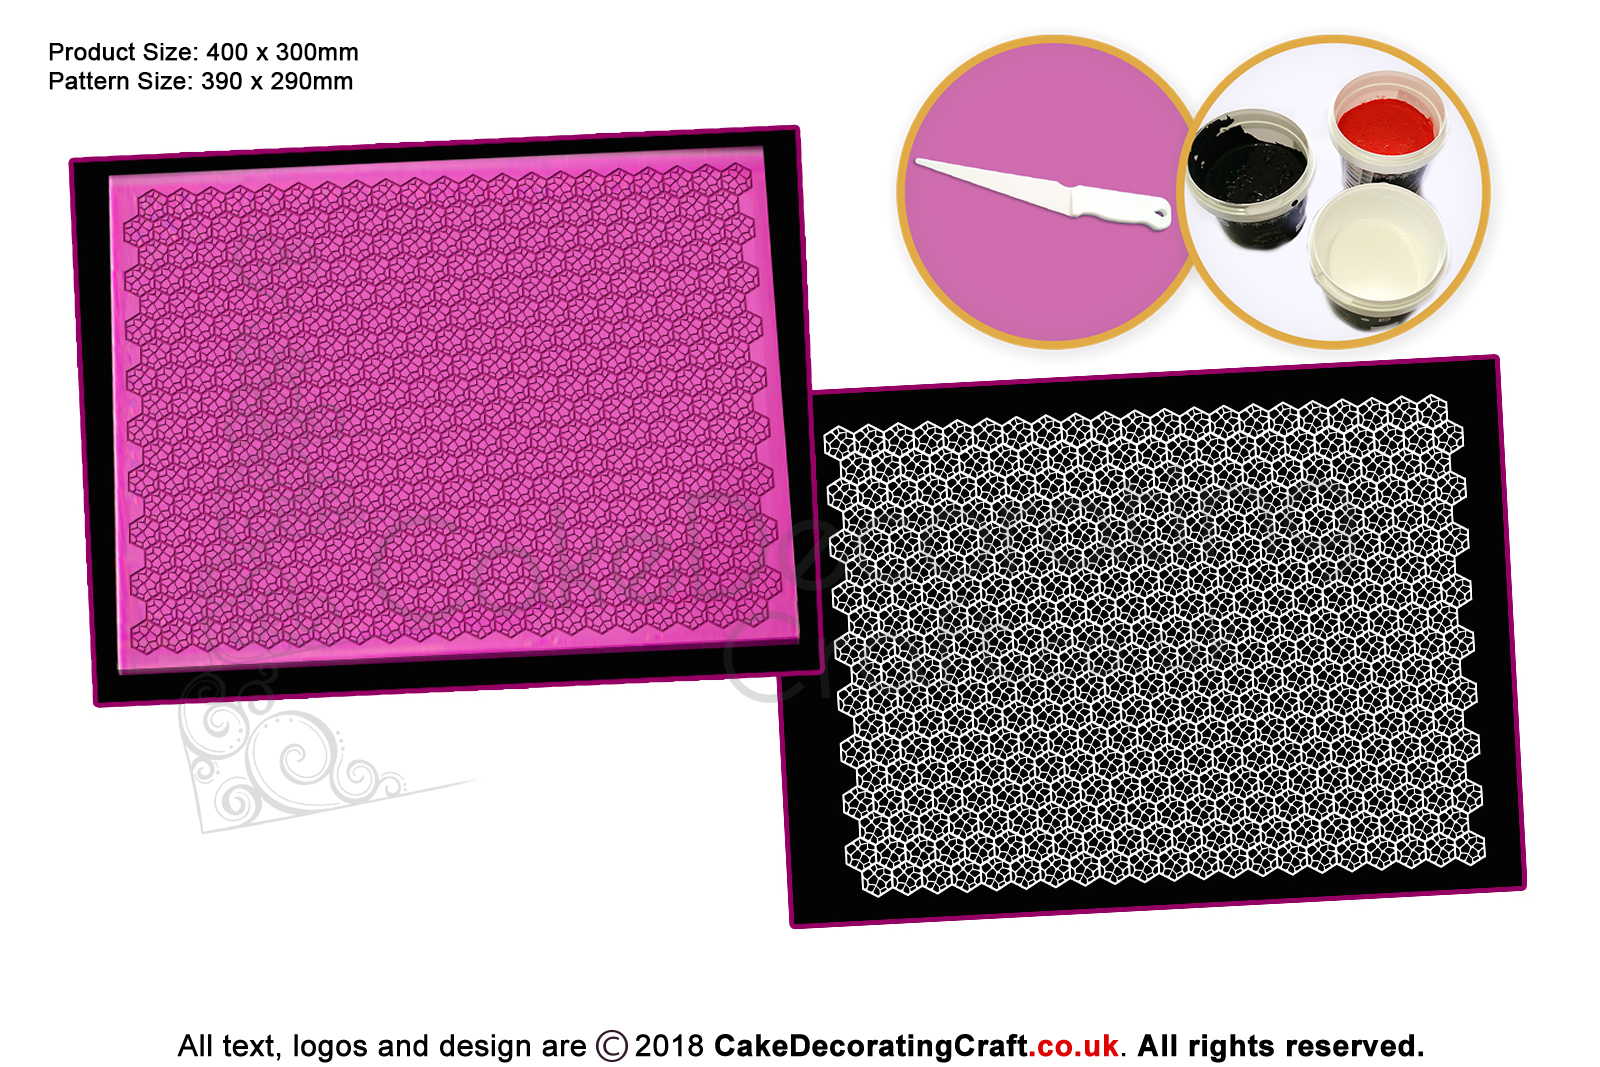 Fabric Mesh | Cake Lace Mats for Edible Cake Lace Mixes and Premixes | Cake Decorating Craft Tool